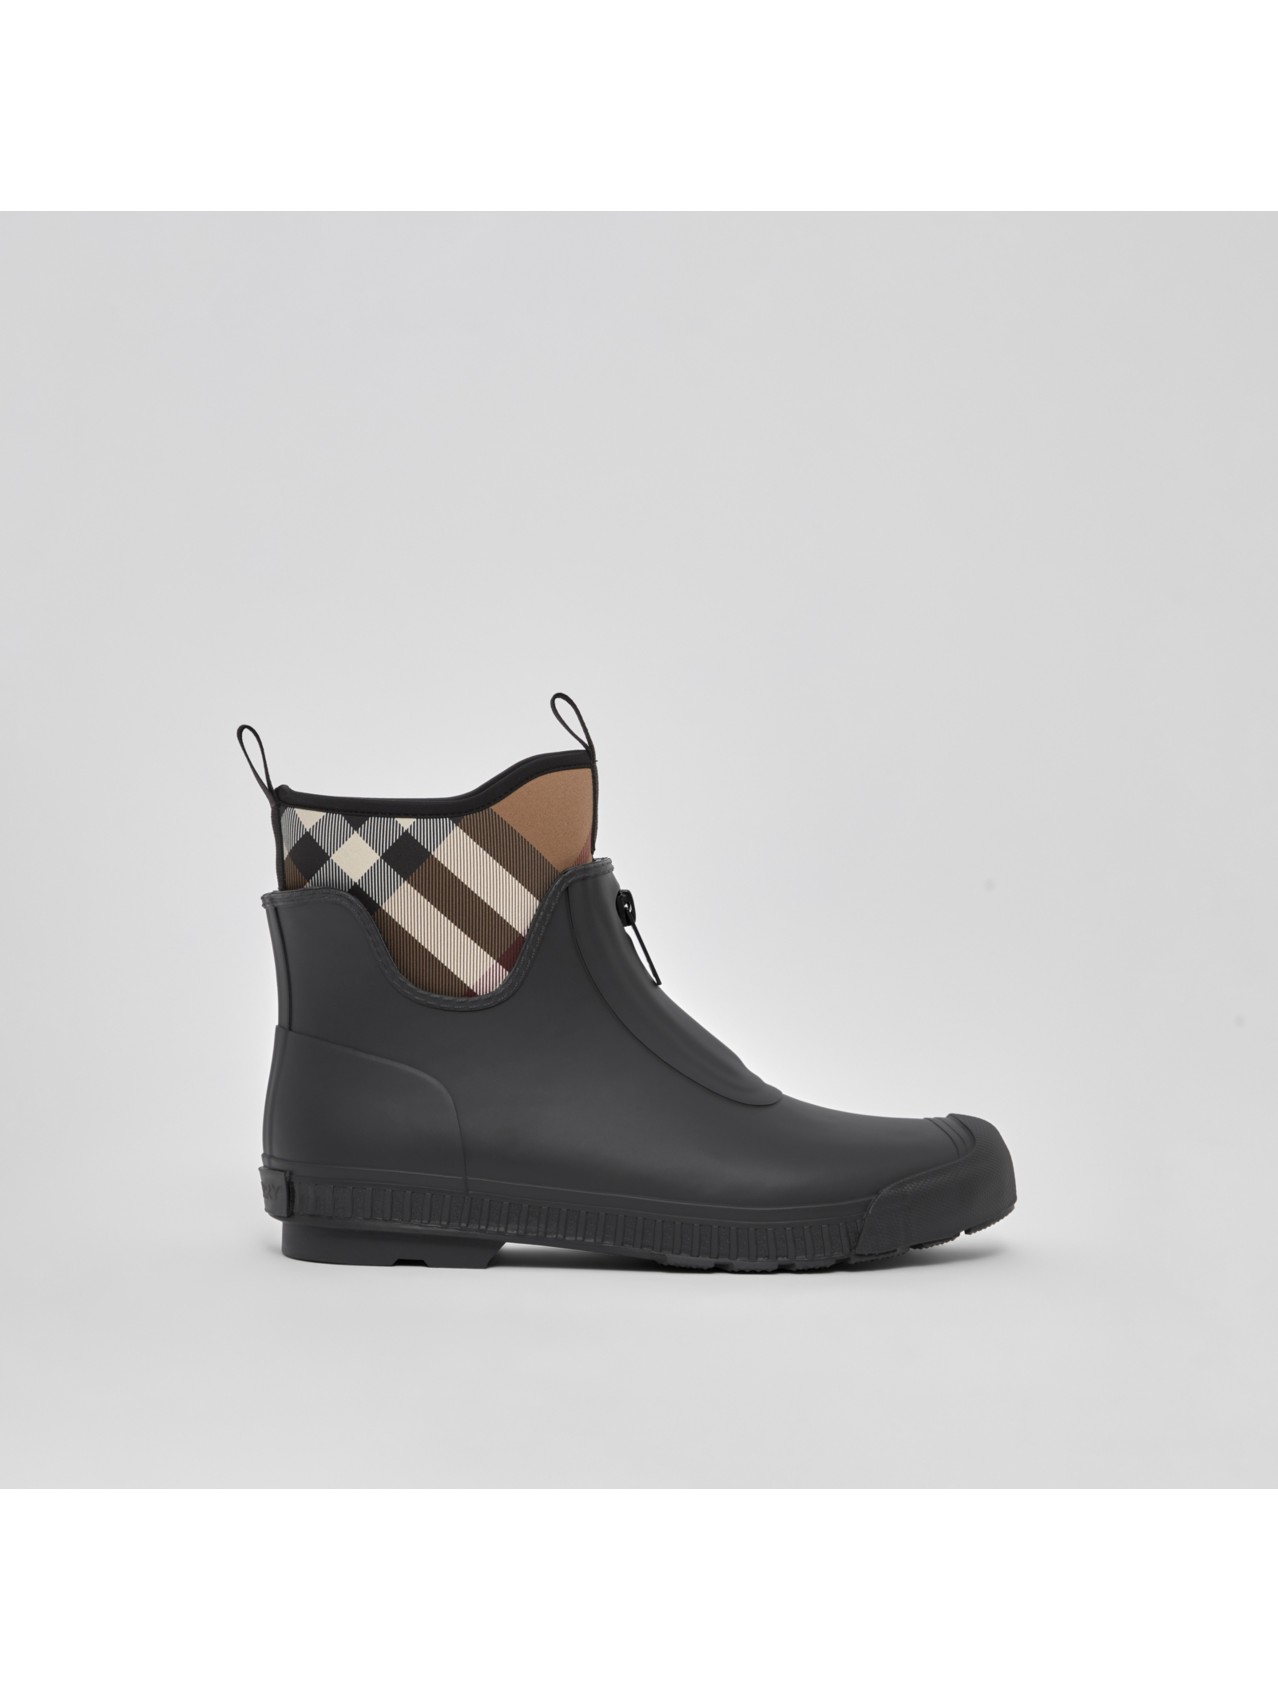 Men’s Shoes | Men’s Casual & Formal Footwear | Burberry® Official